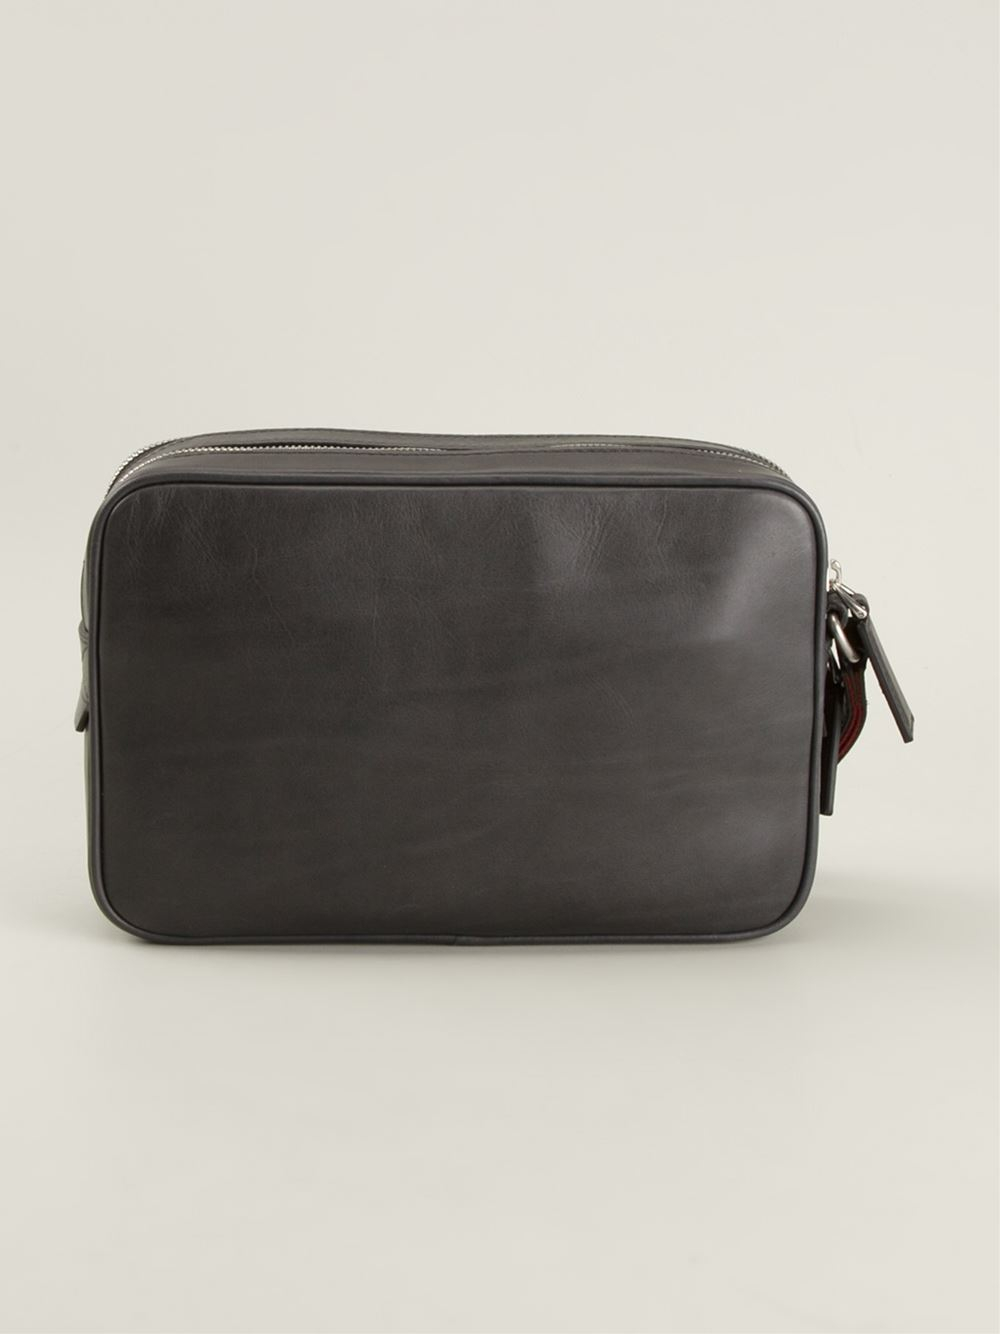 Lyst - Bally Clutch Bag in Gray for Men